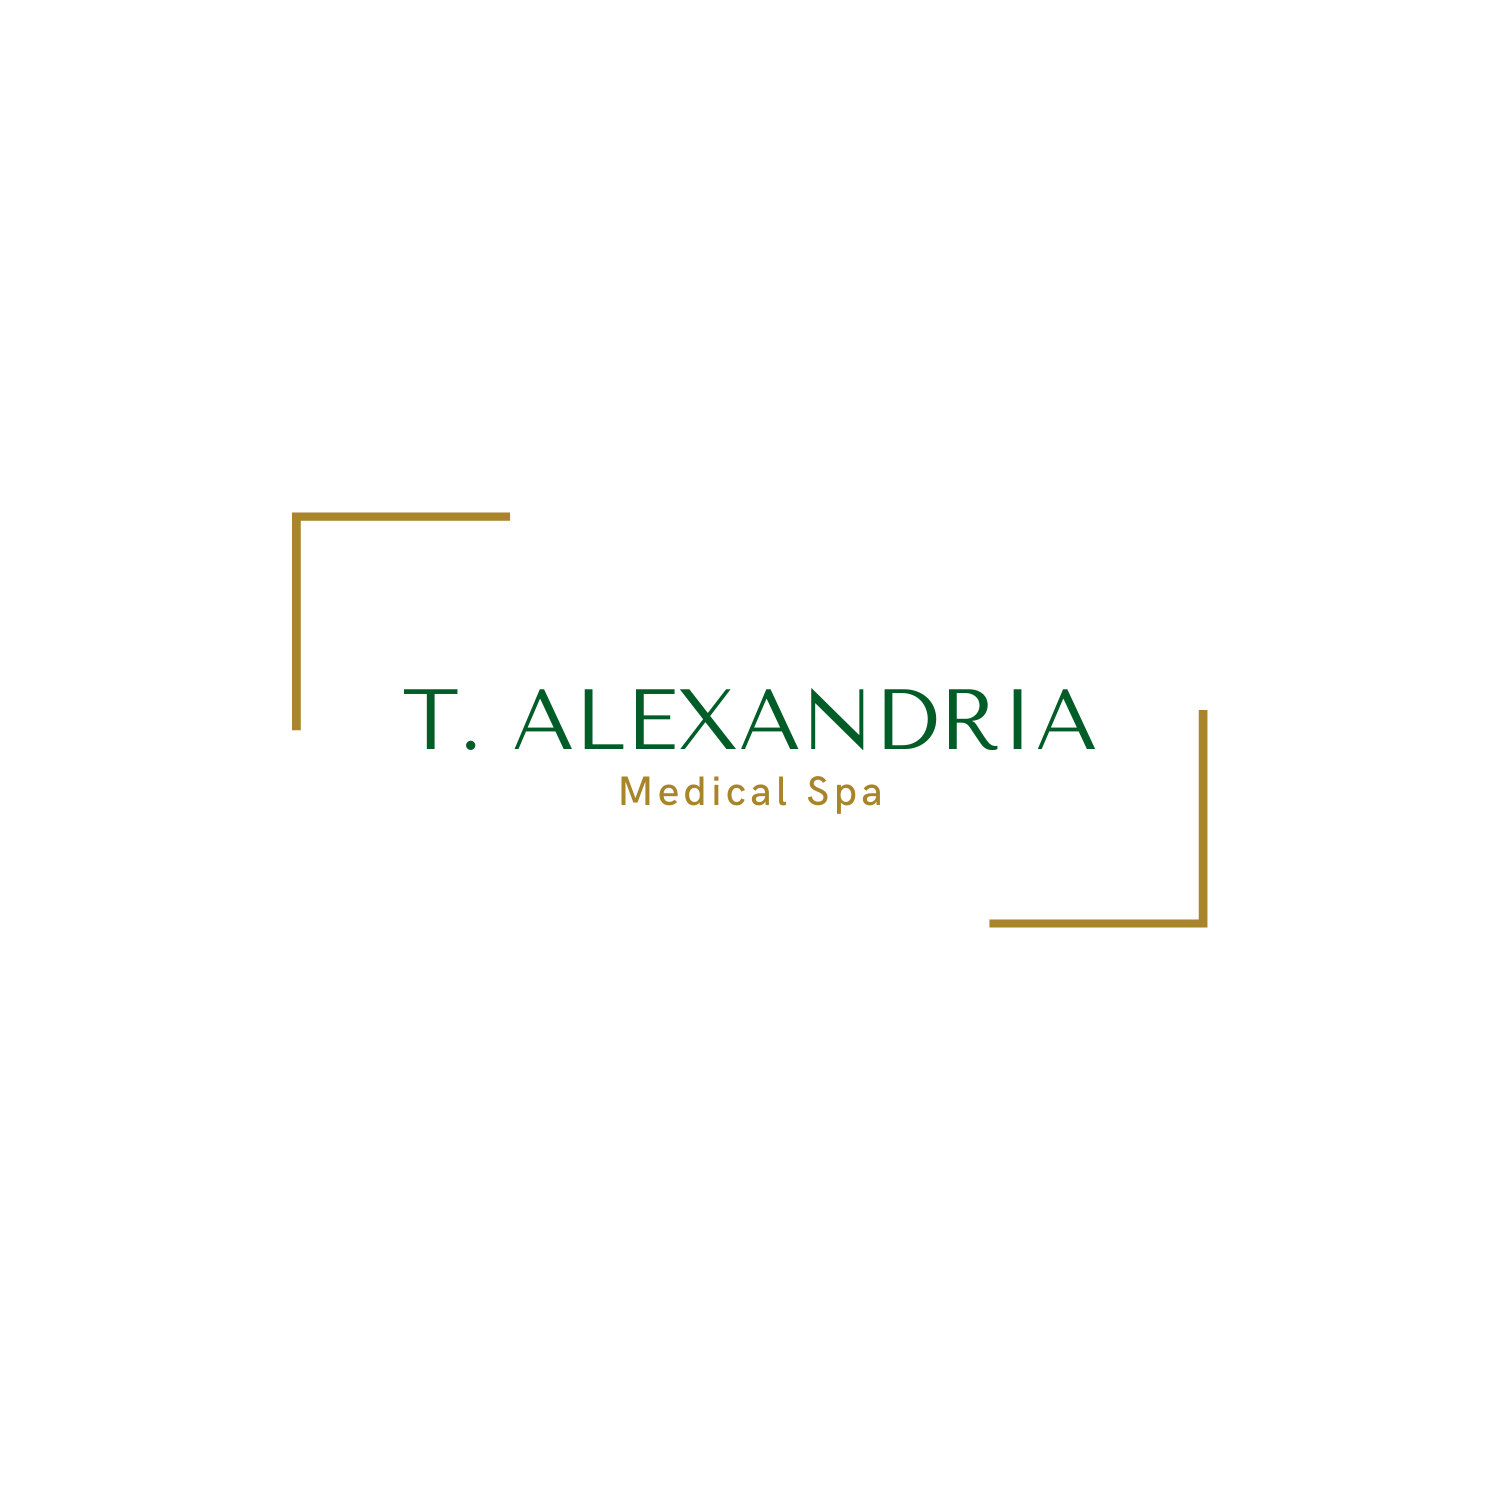 T. Alexandria